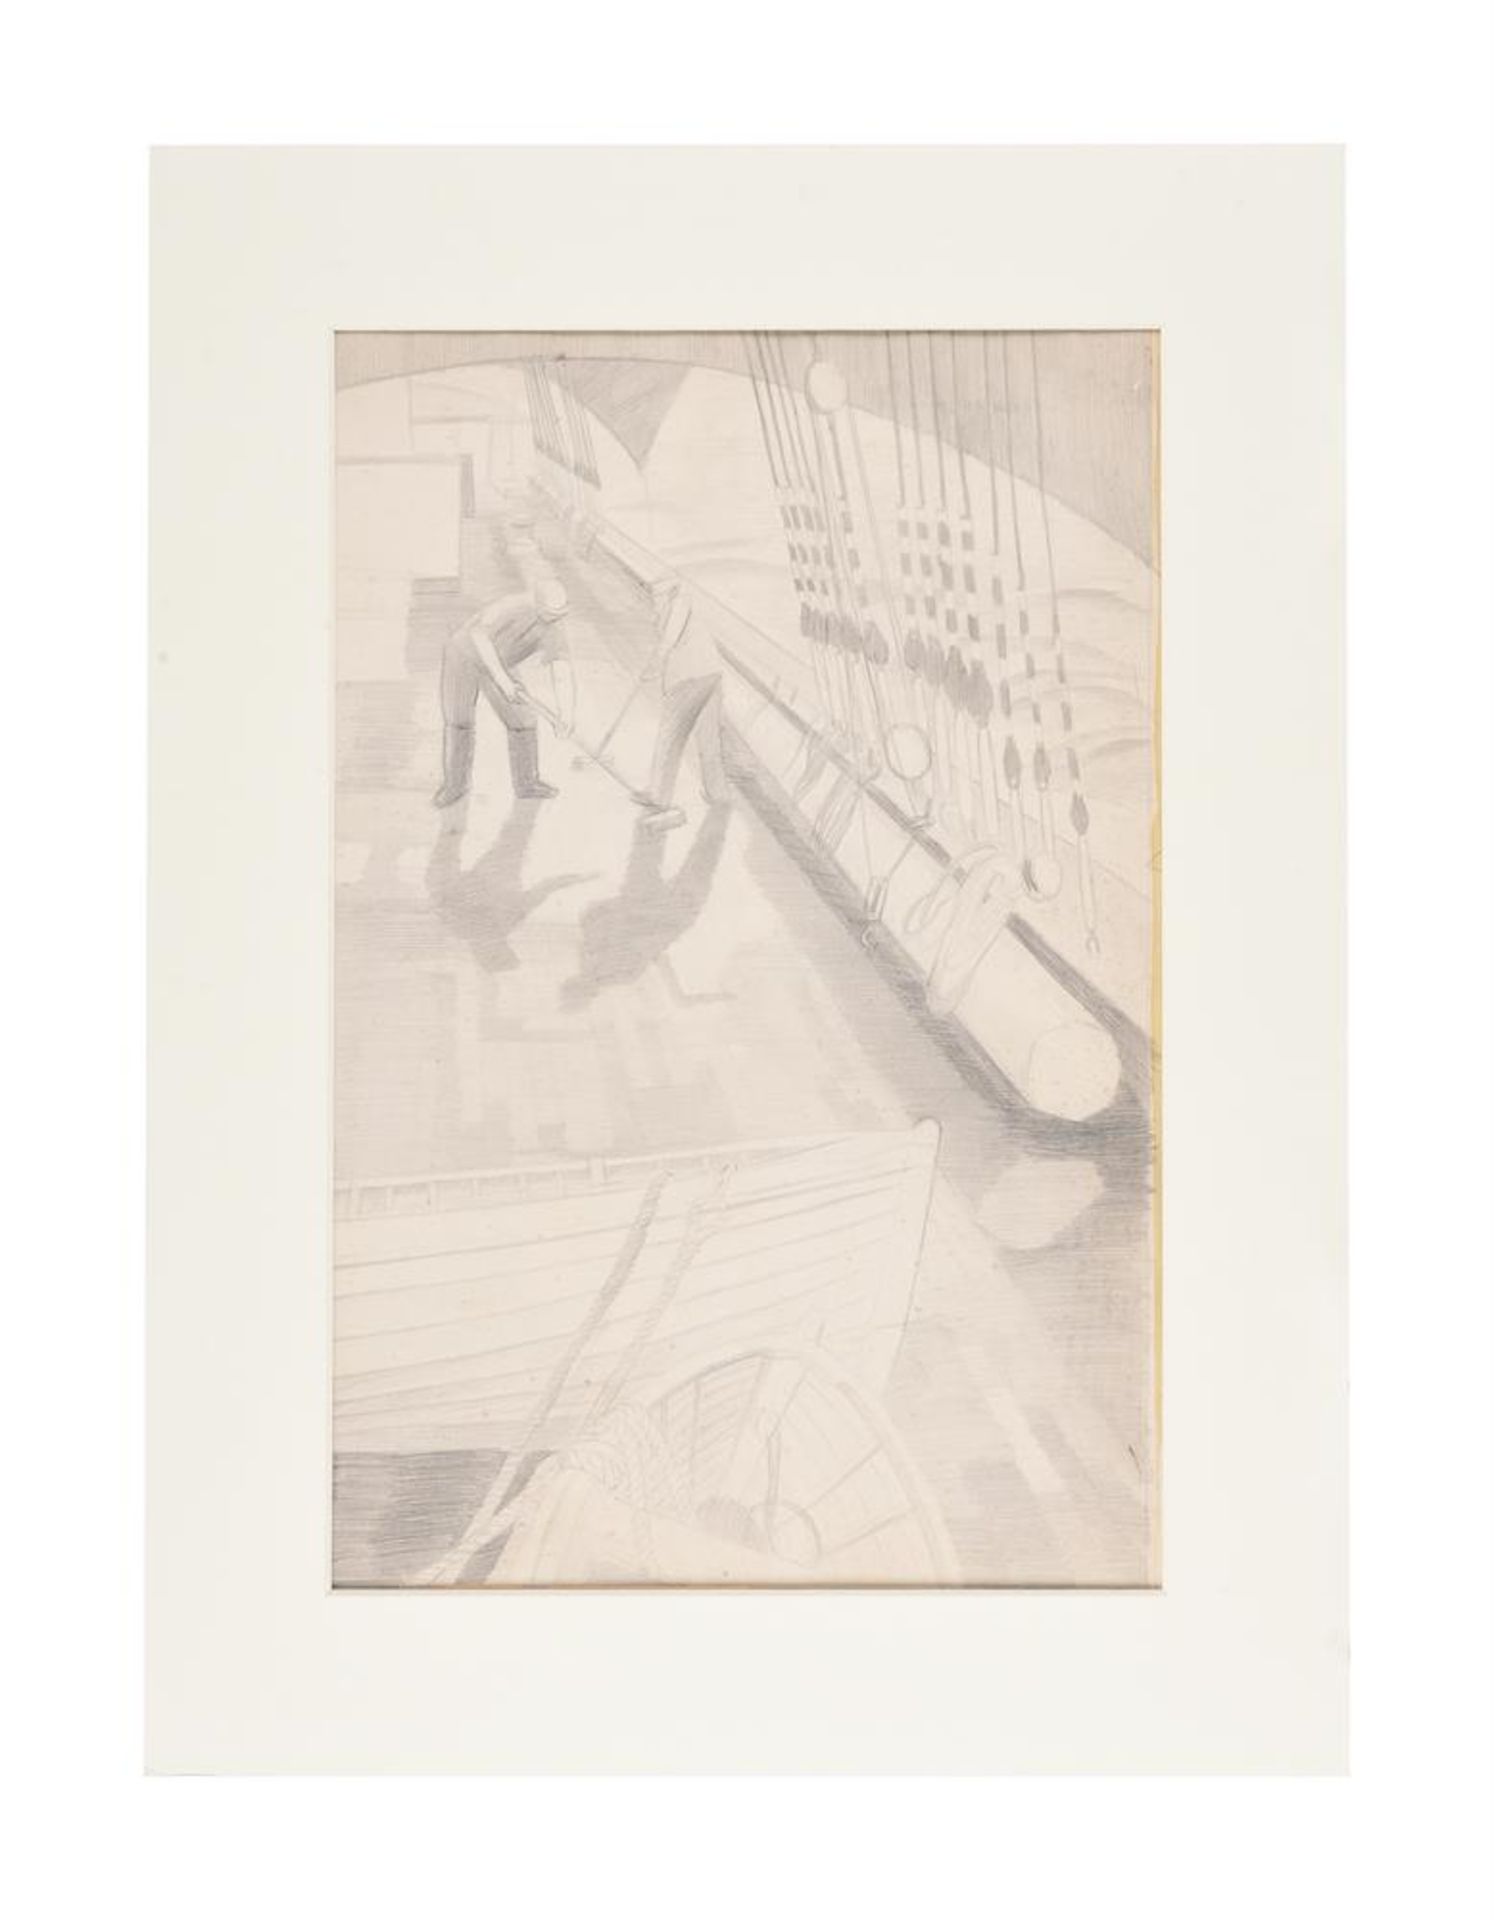 RICHARD CARLINE (BRITISH 1896-1980), SCRUBBING THE DECK OF THE GRACE HAWAR, CIRCA 1930